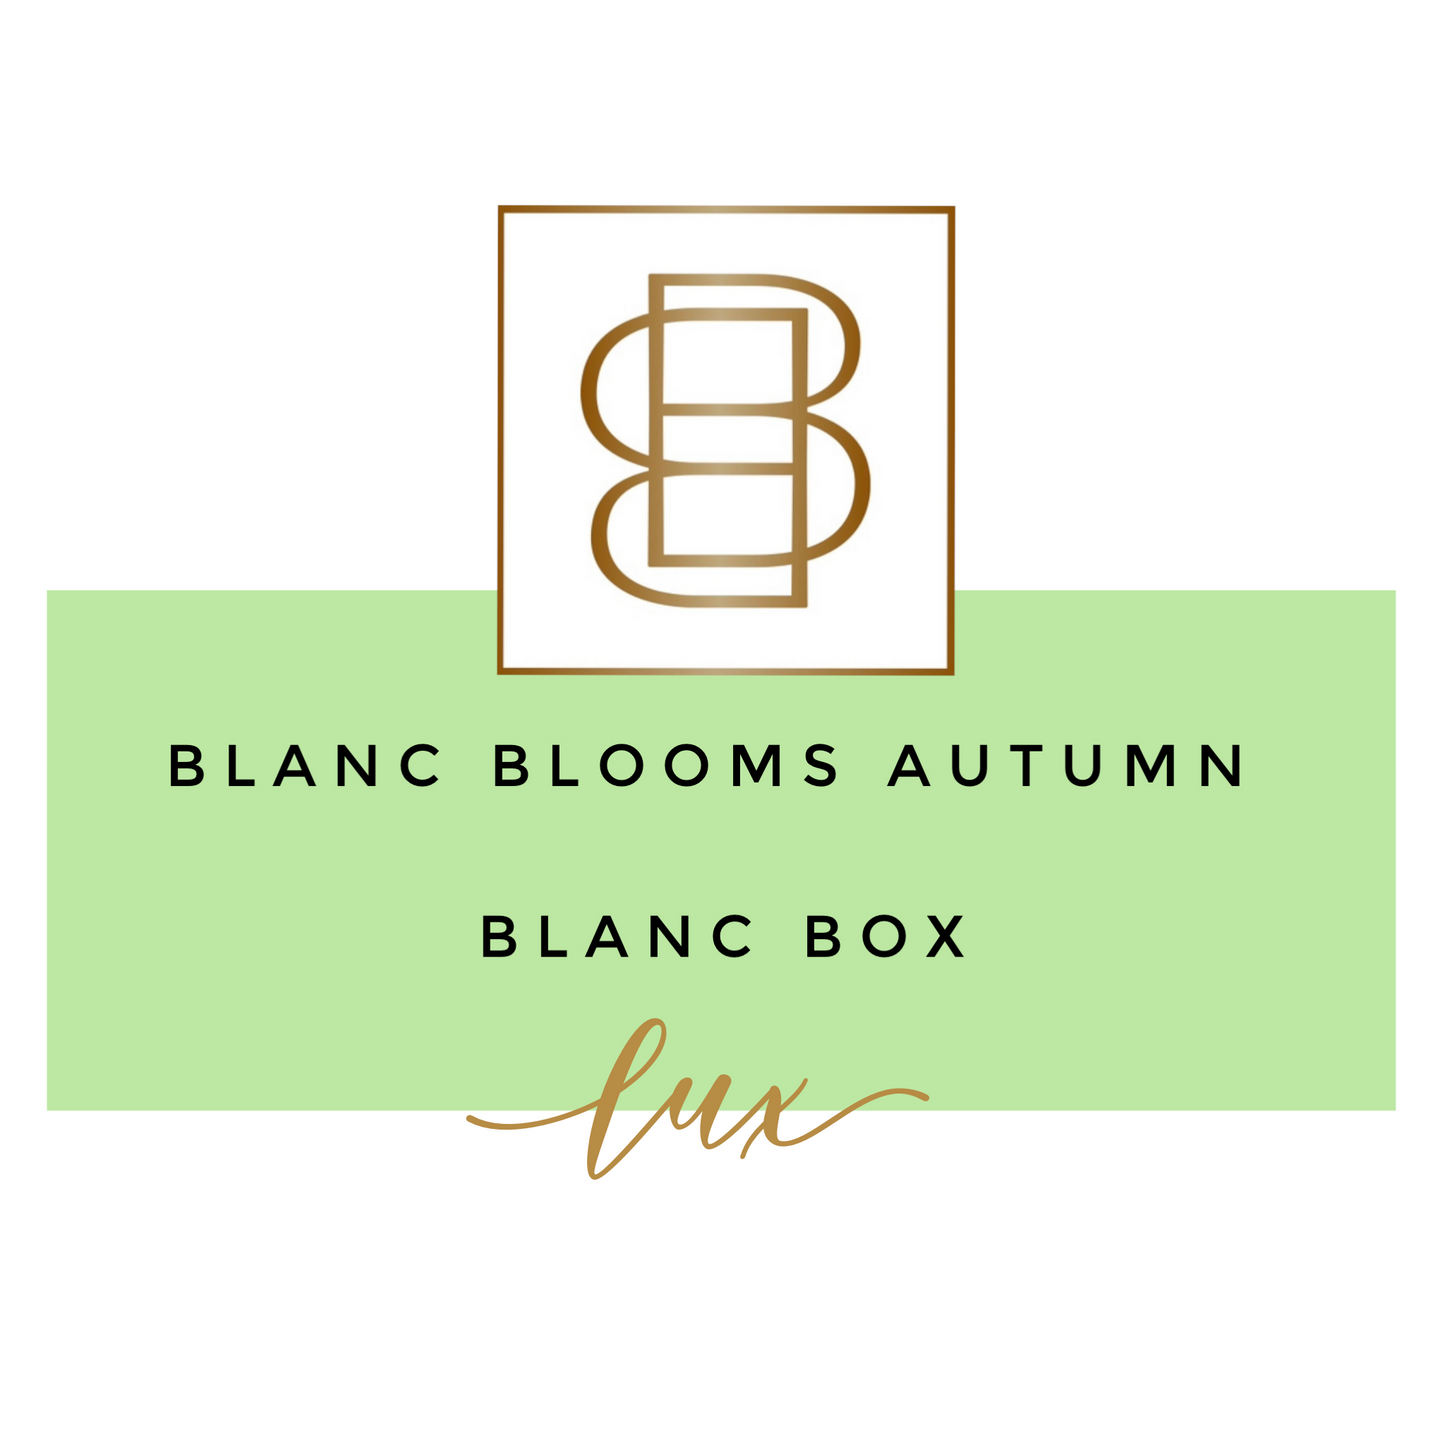 Blanc Blooms Autumn Blanc Box Lux